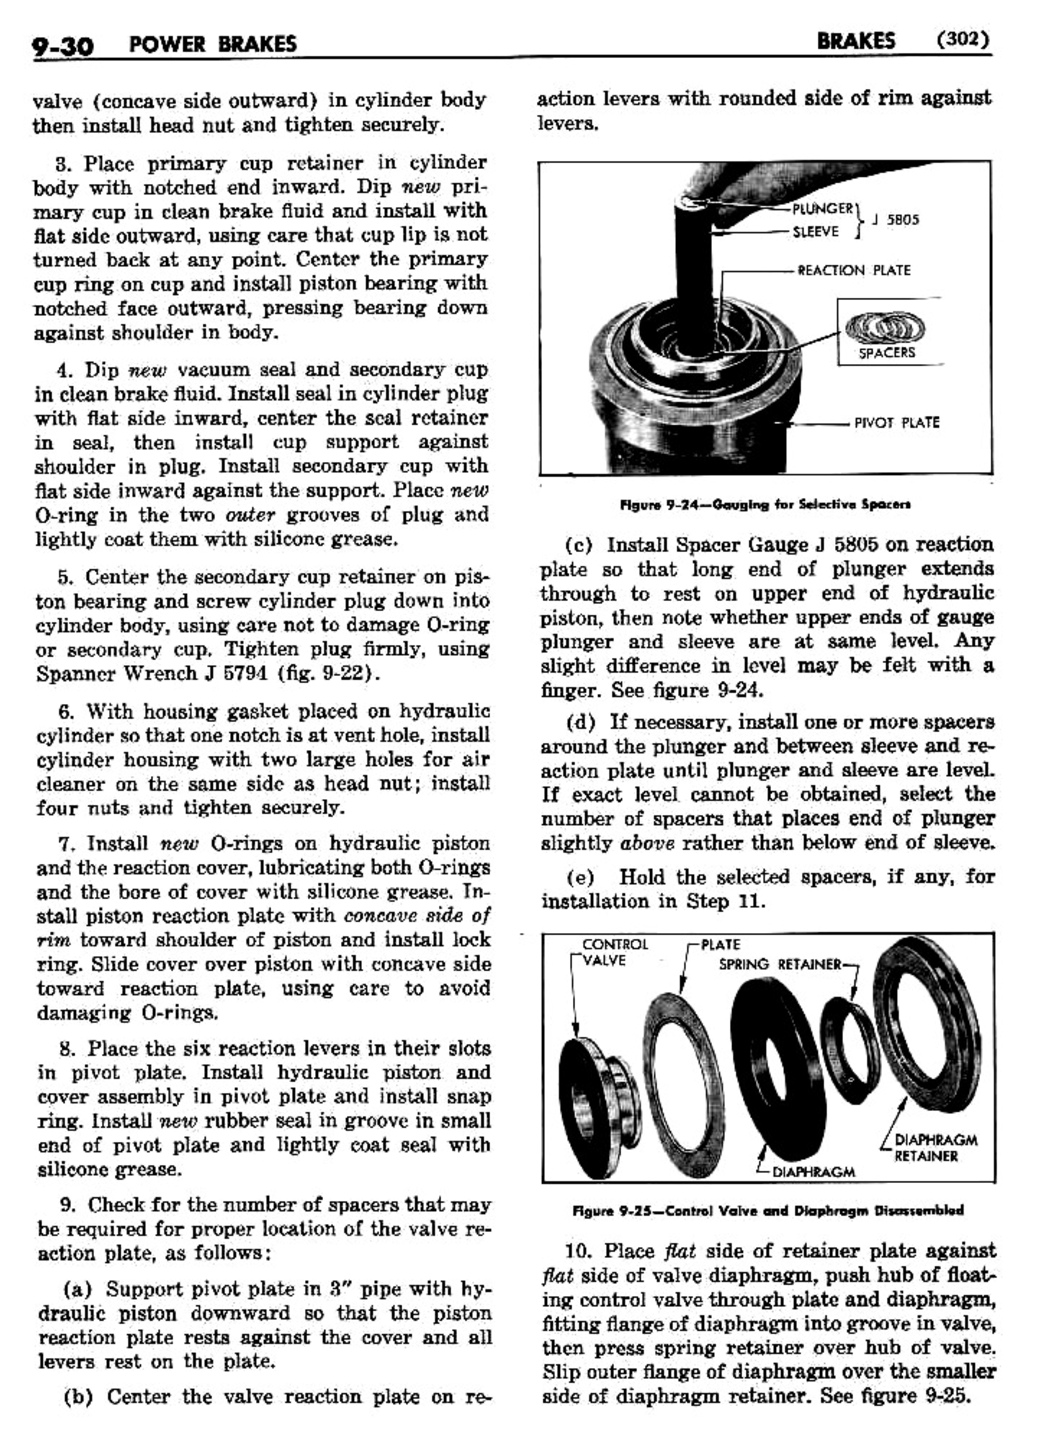 n_10 1955 Buick Shop Manual - Brakes-030-030.jpg